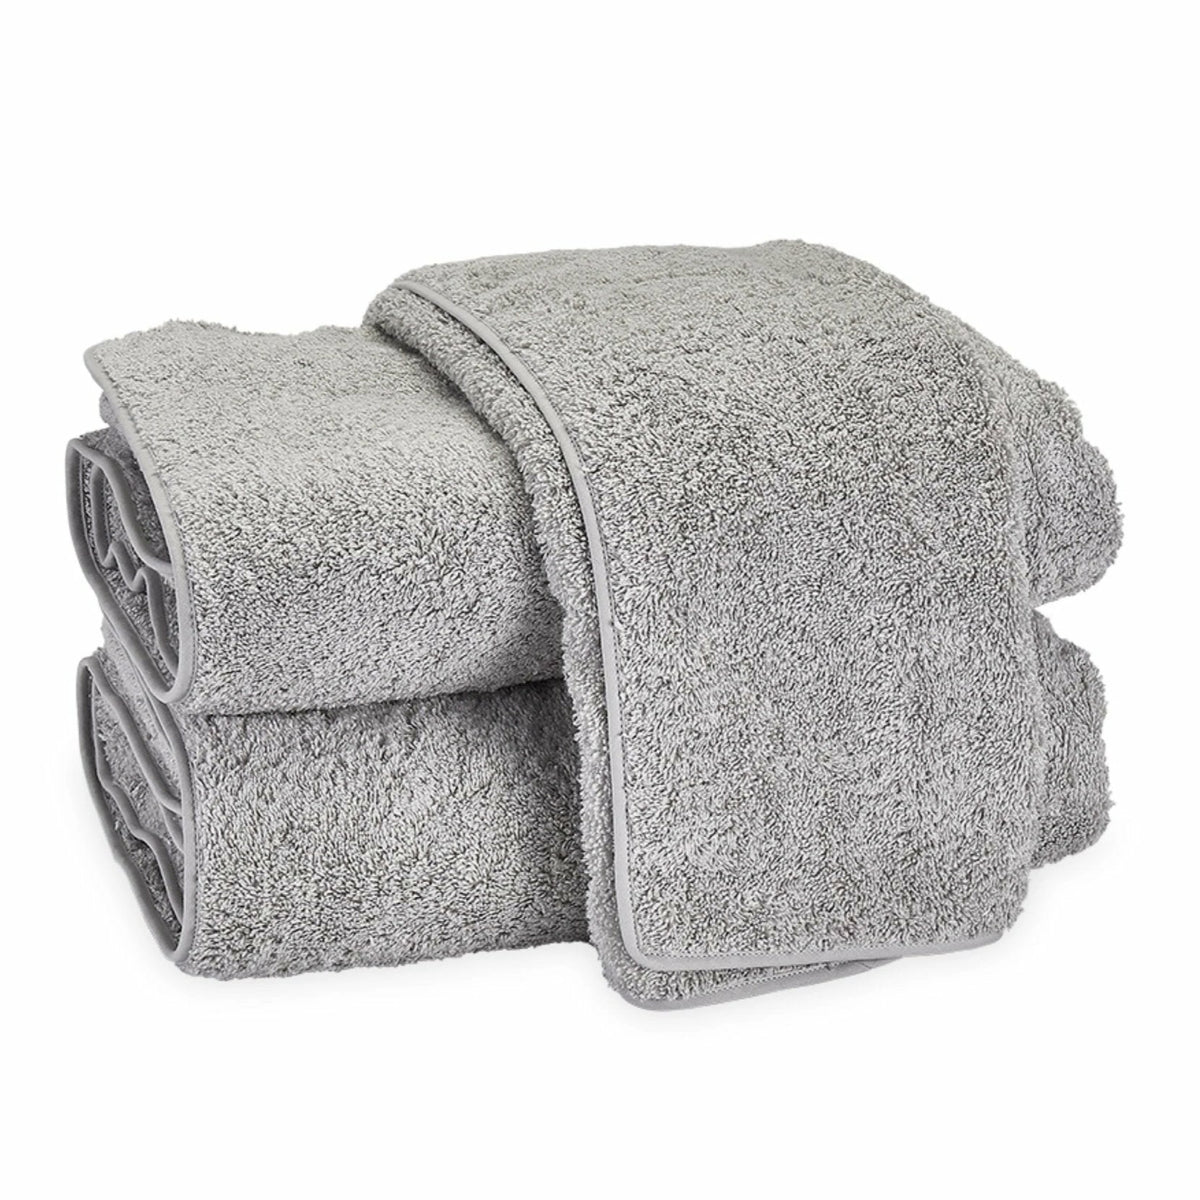 Fleece Bath Towel 